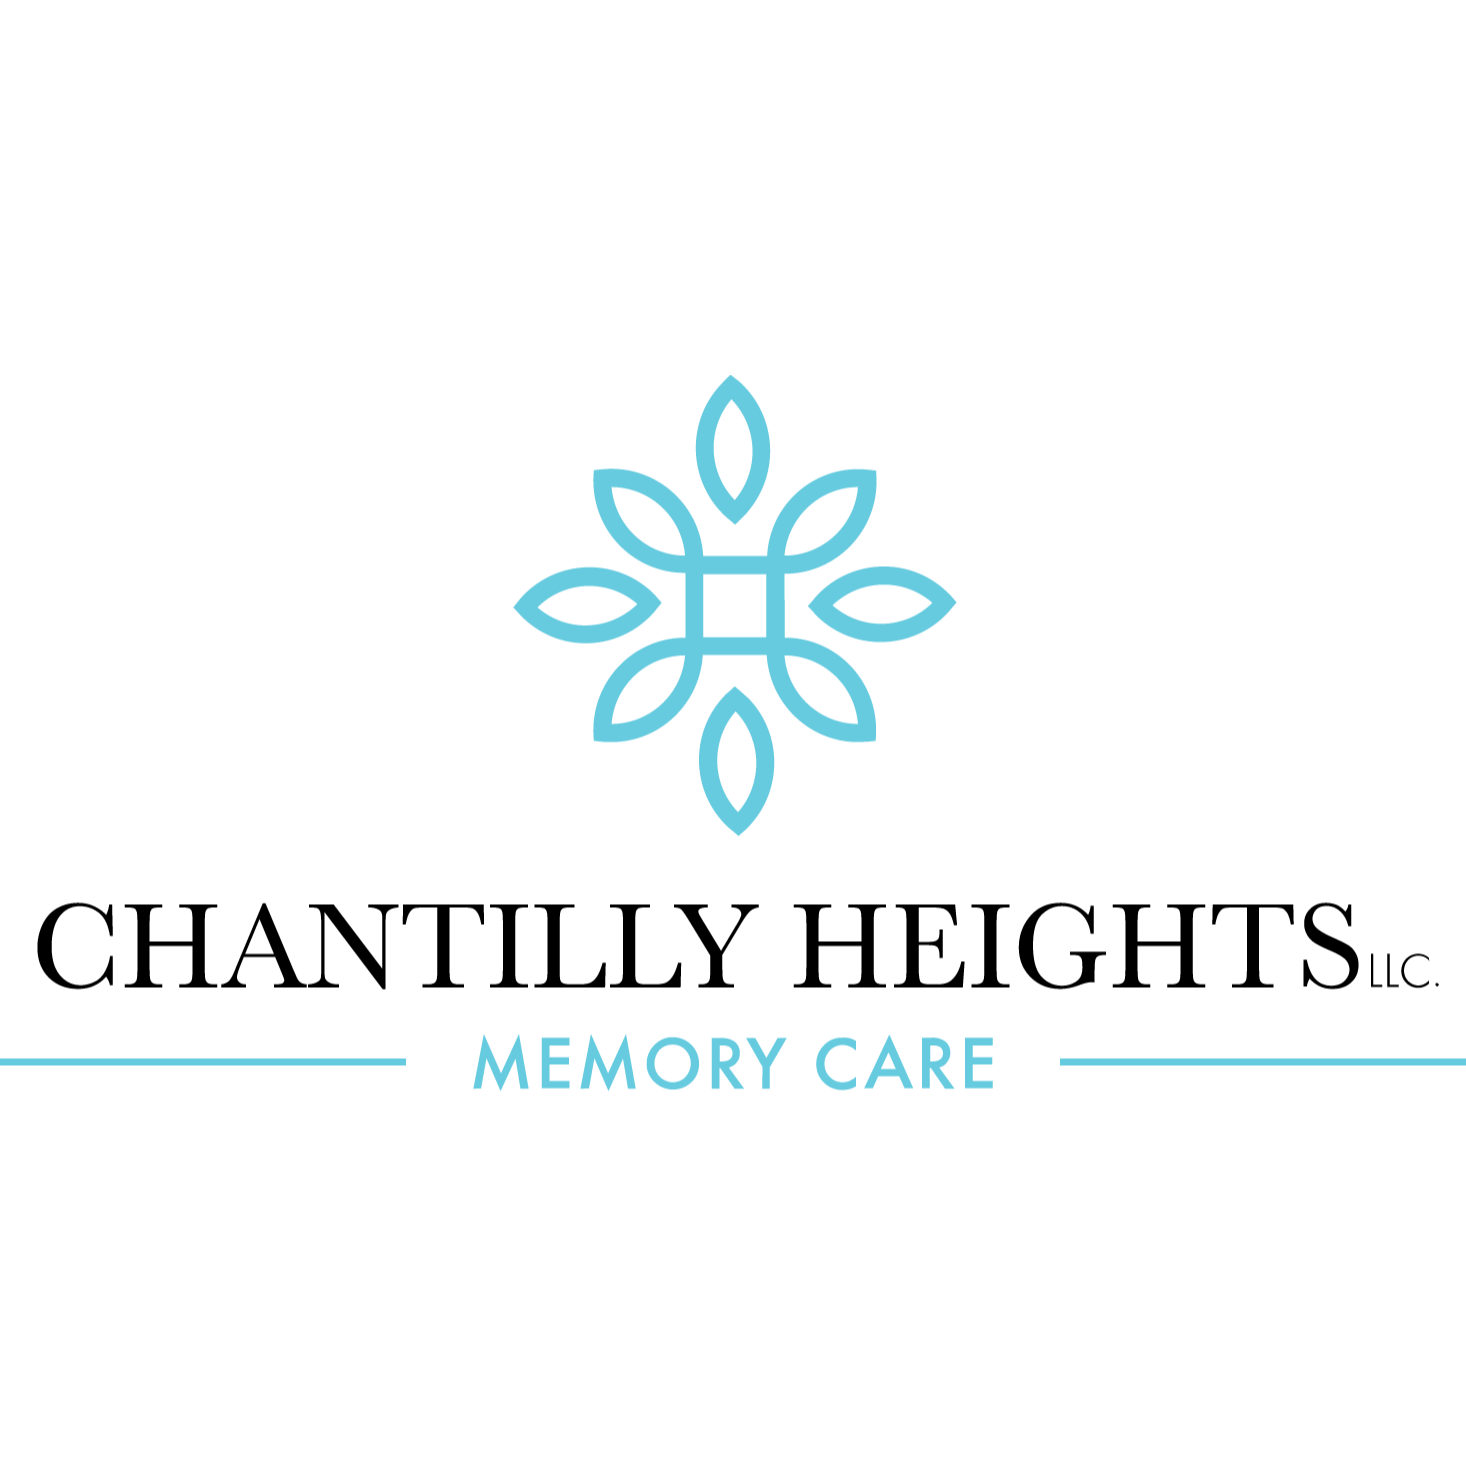 Chantilly Heights Memory Care - Chantilly, VA 20151 - (703)810-3992 | ShowMeLocal.com